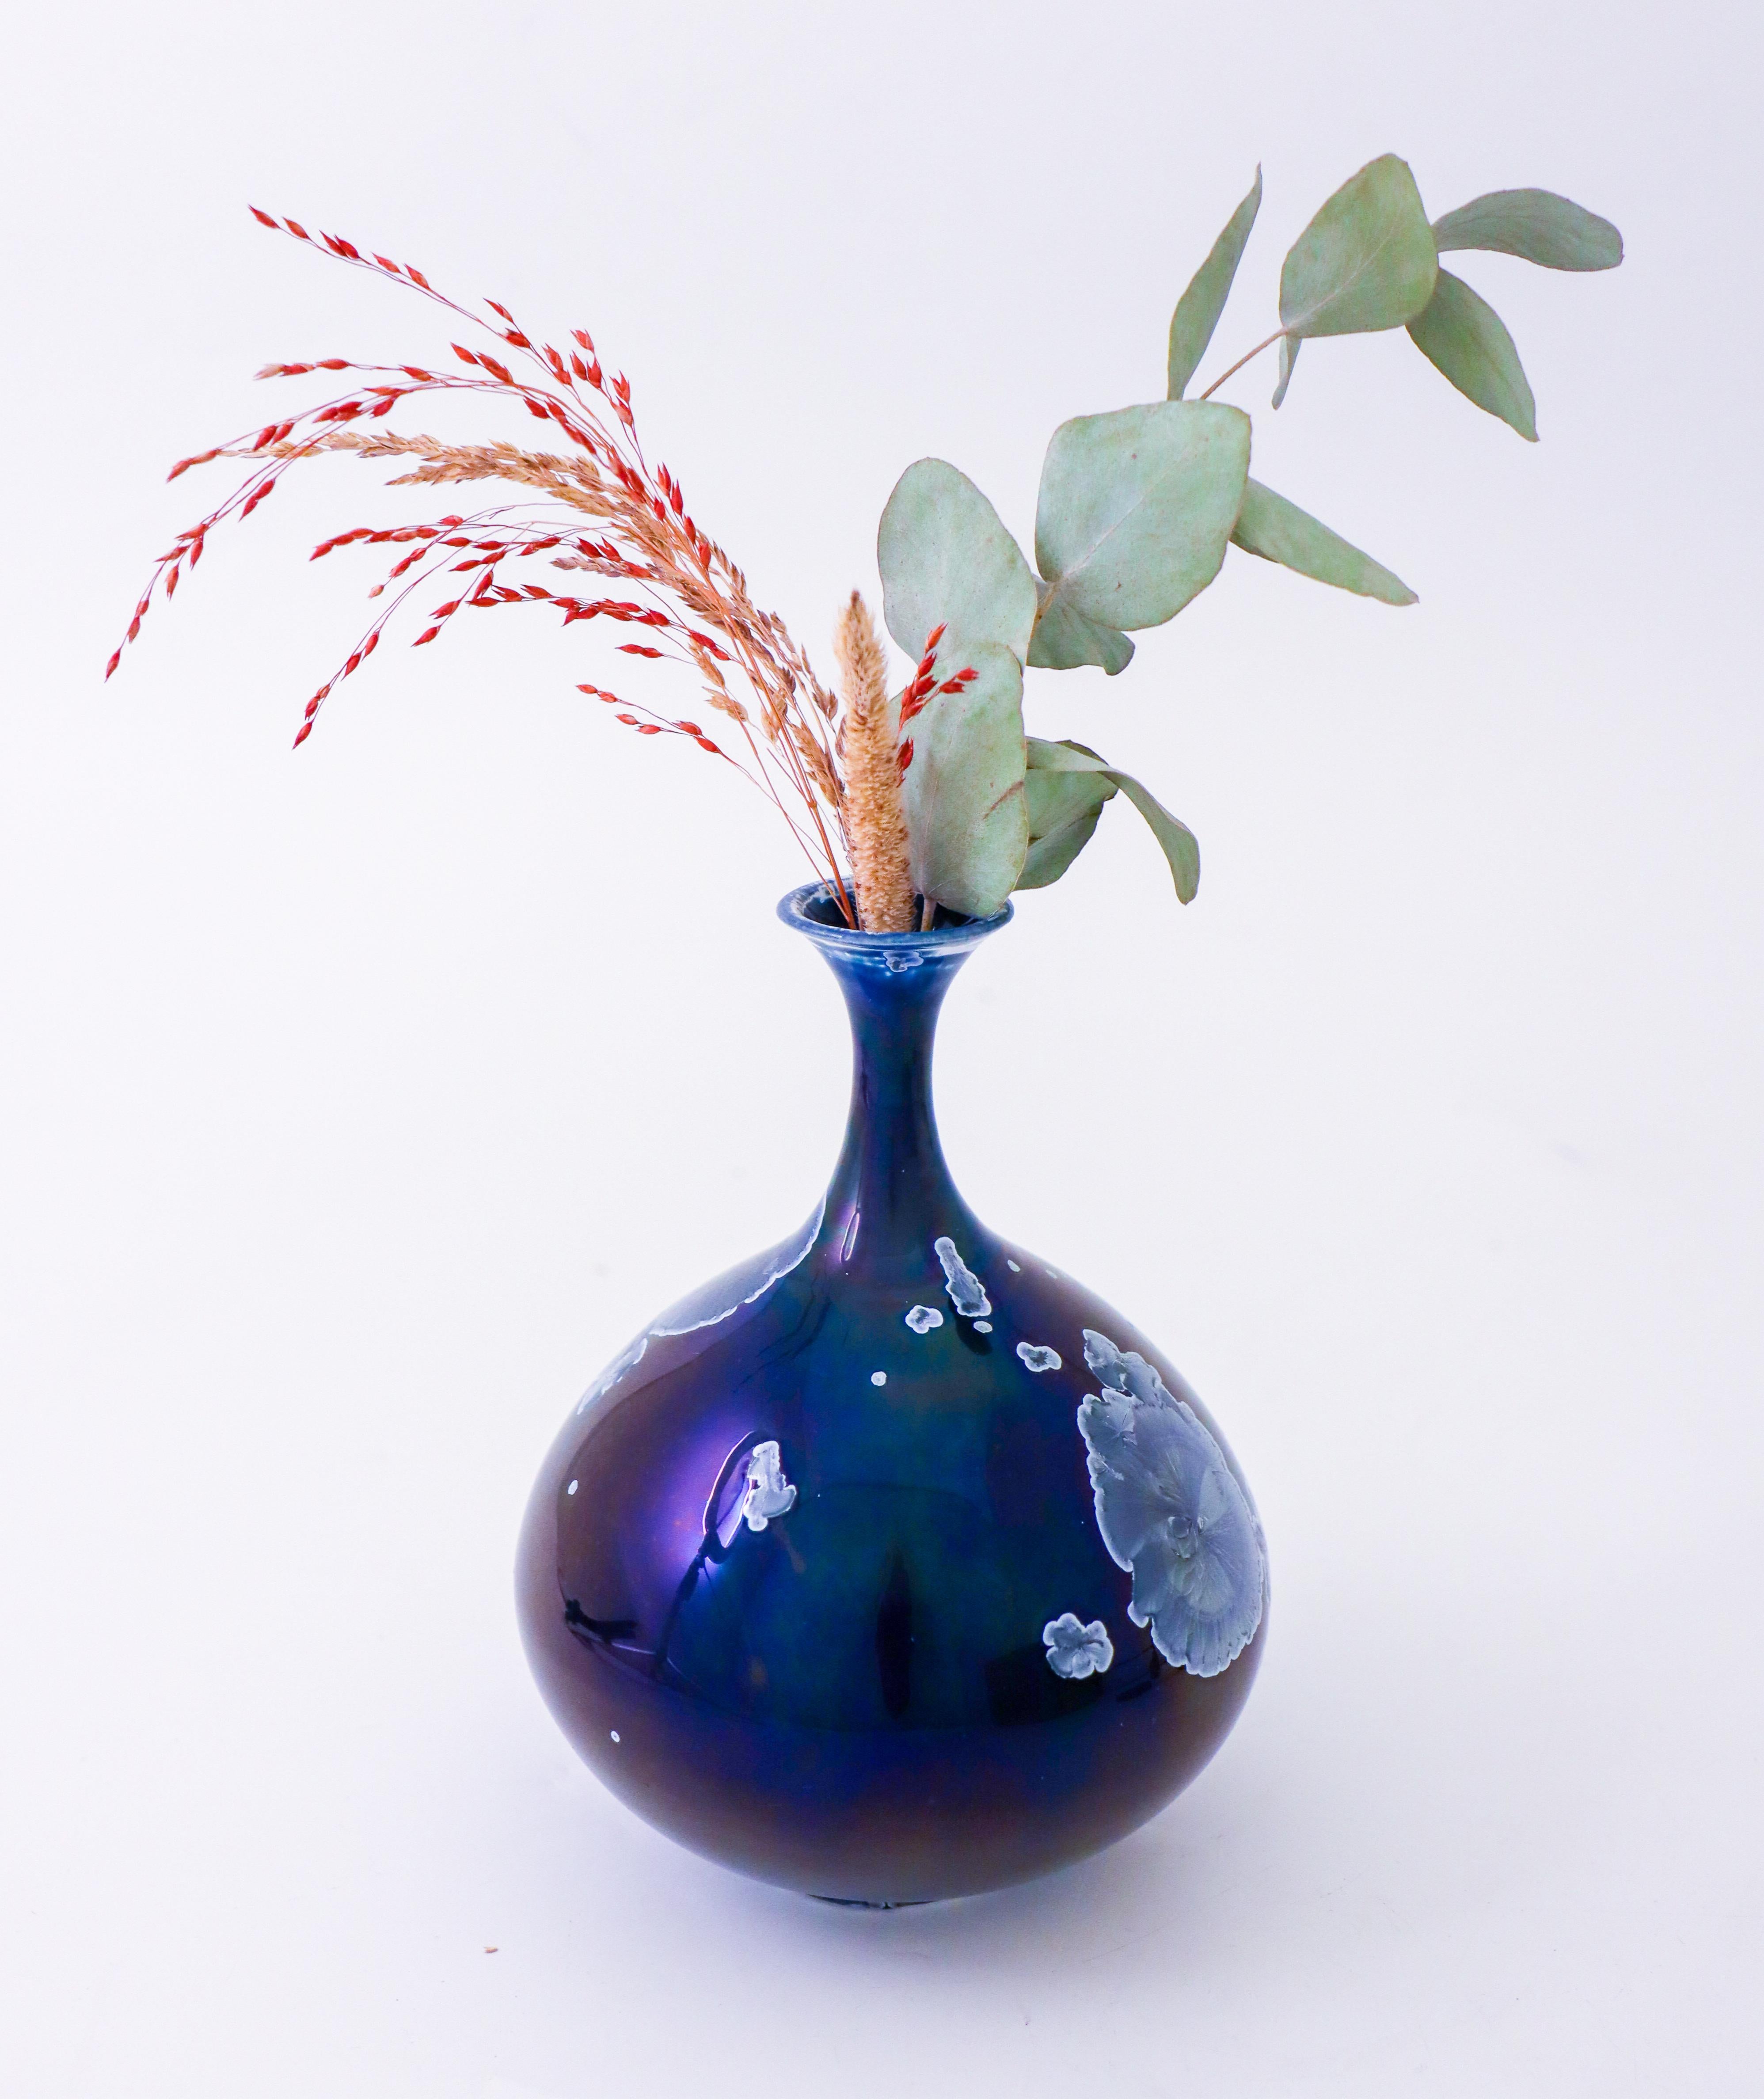 Glazed Isak Isaksson Blue Ceramic Vase Crystalline Glaze Contemporary Artist